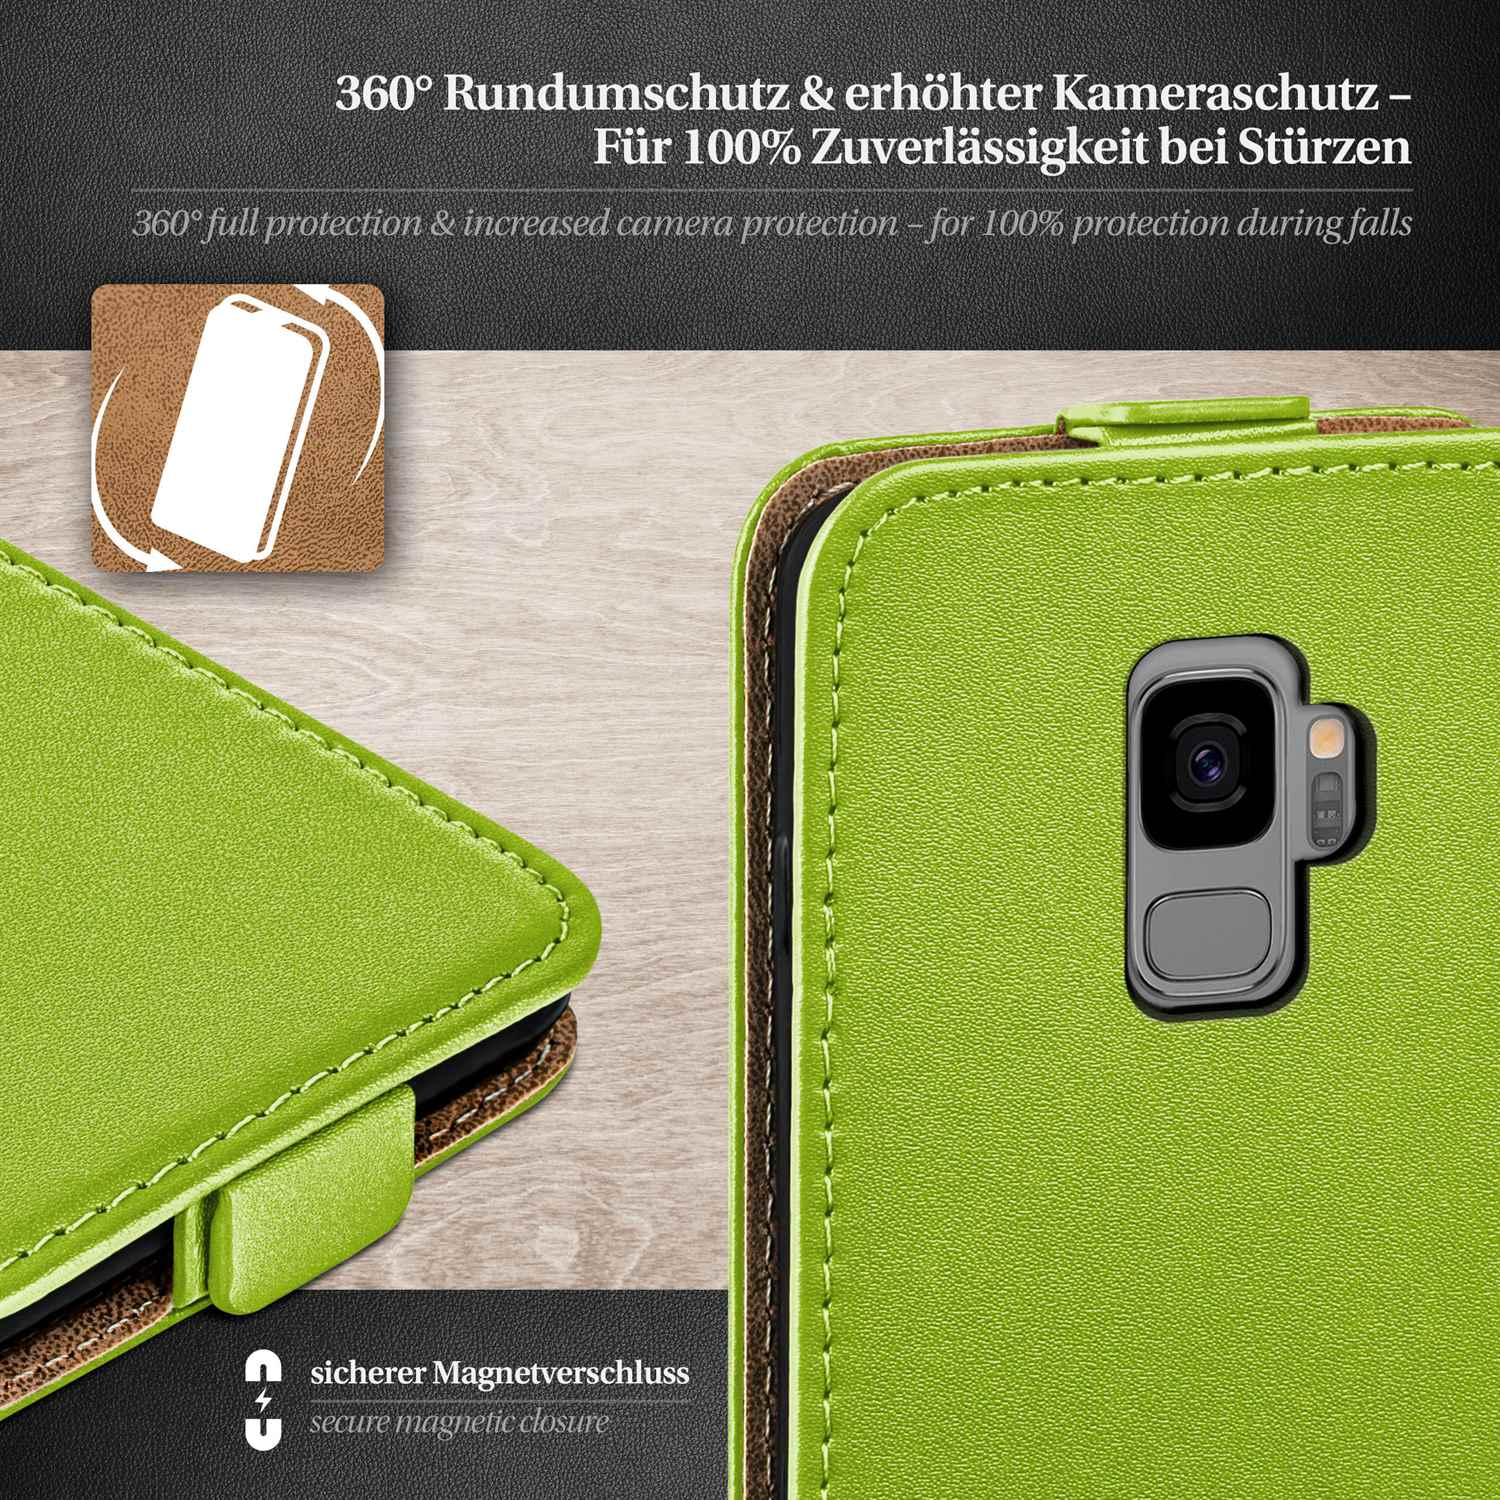 Galaxy Flip Cover, Lime-Green MOEX S9, Case, Samsung, Flip